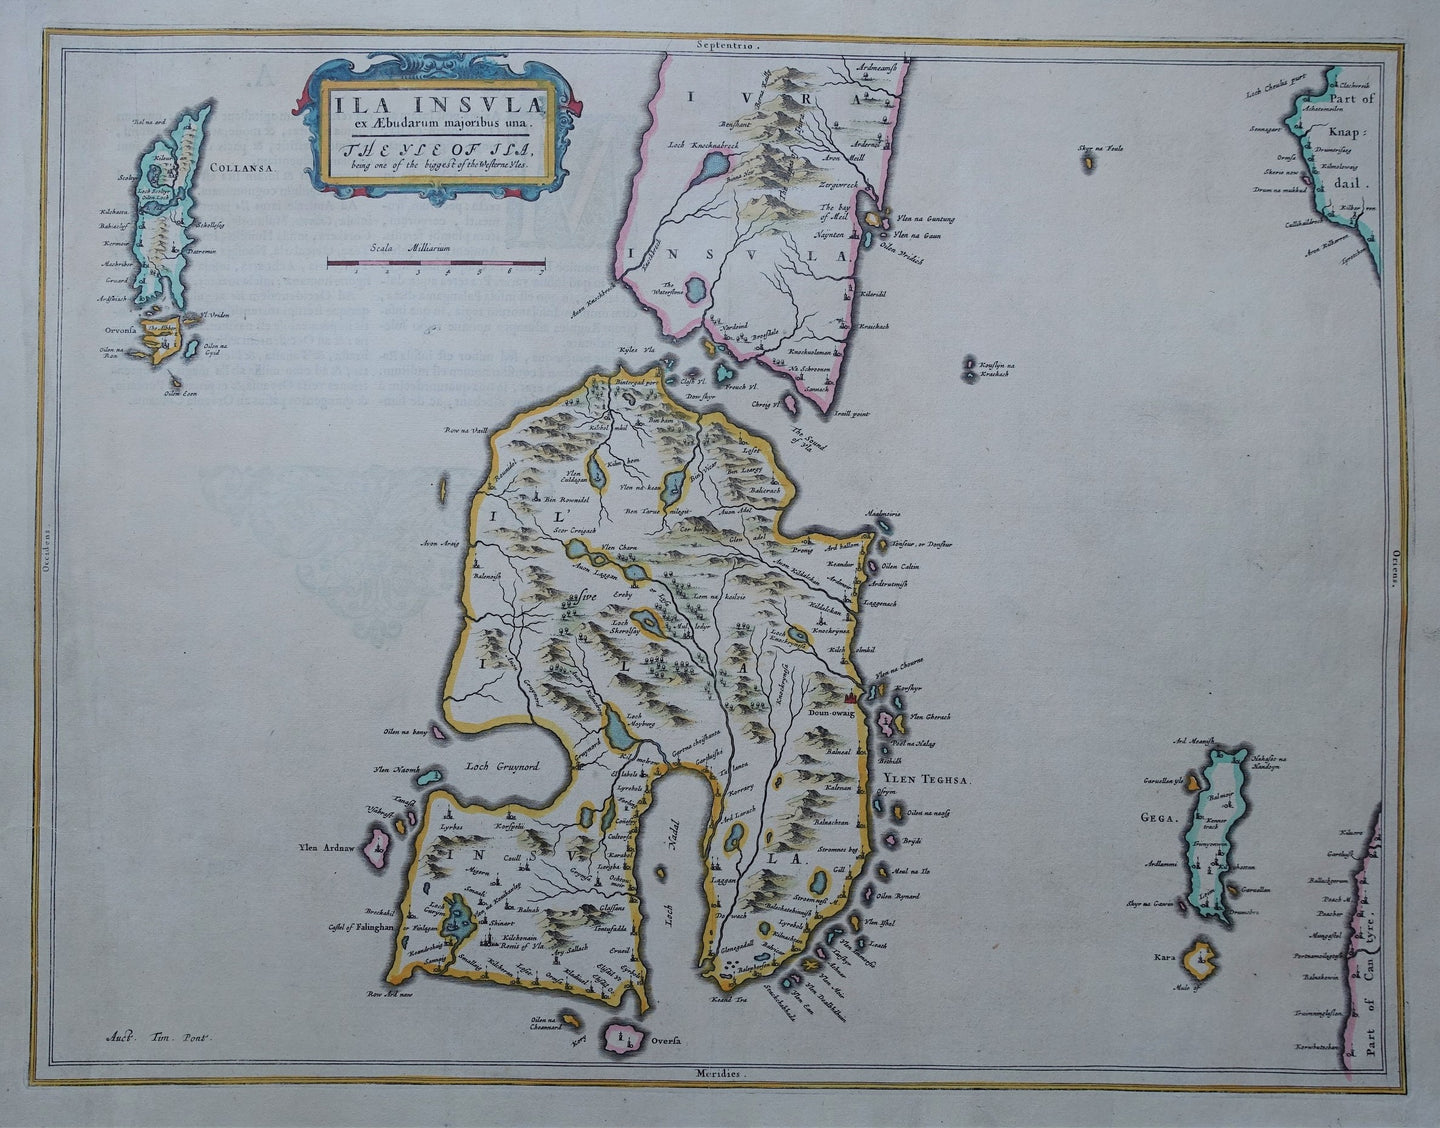 Schotland Islay Jura Scotland - J Blaeu - ca 1654